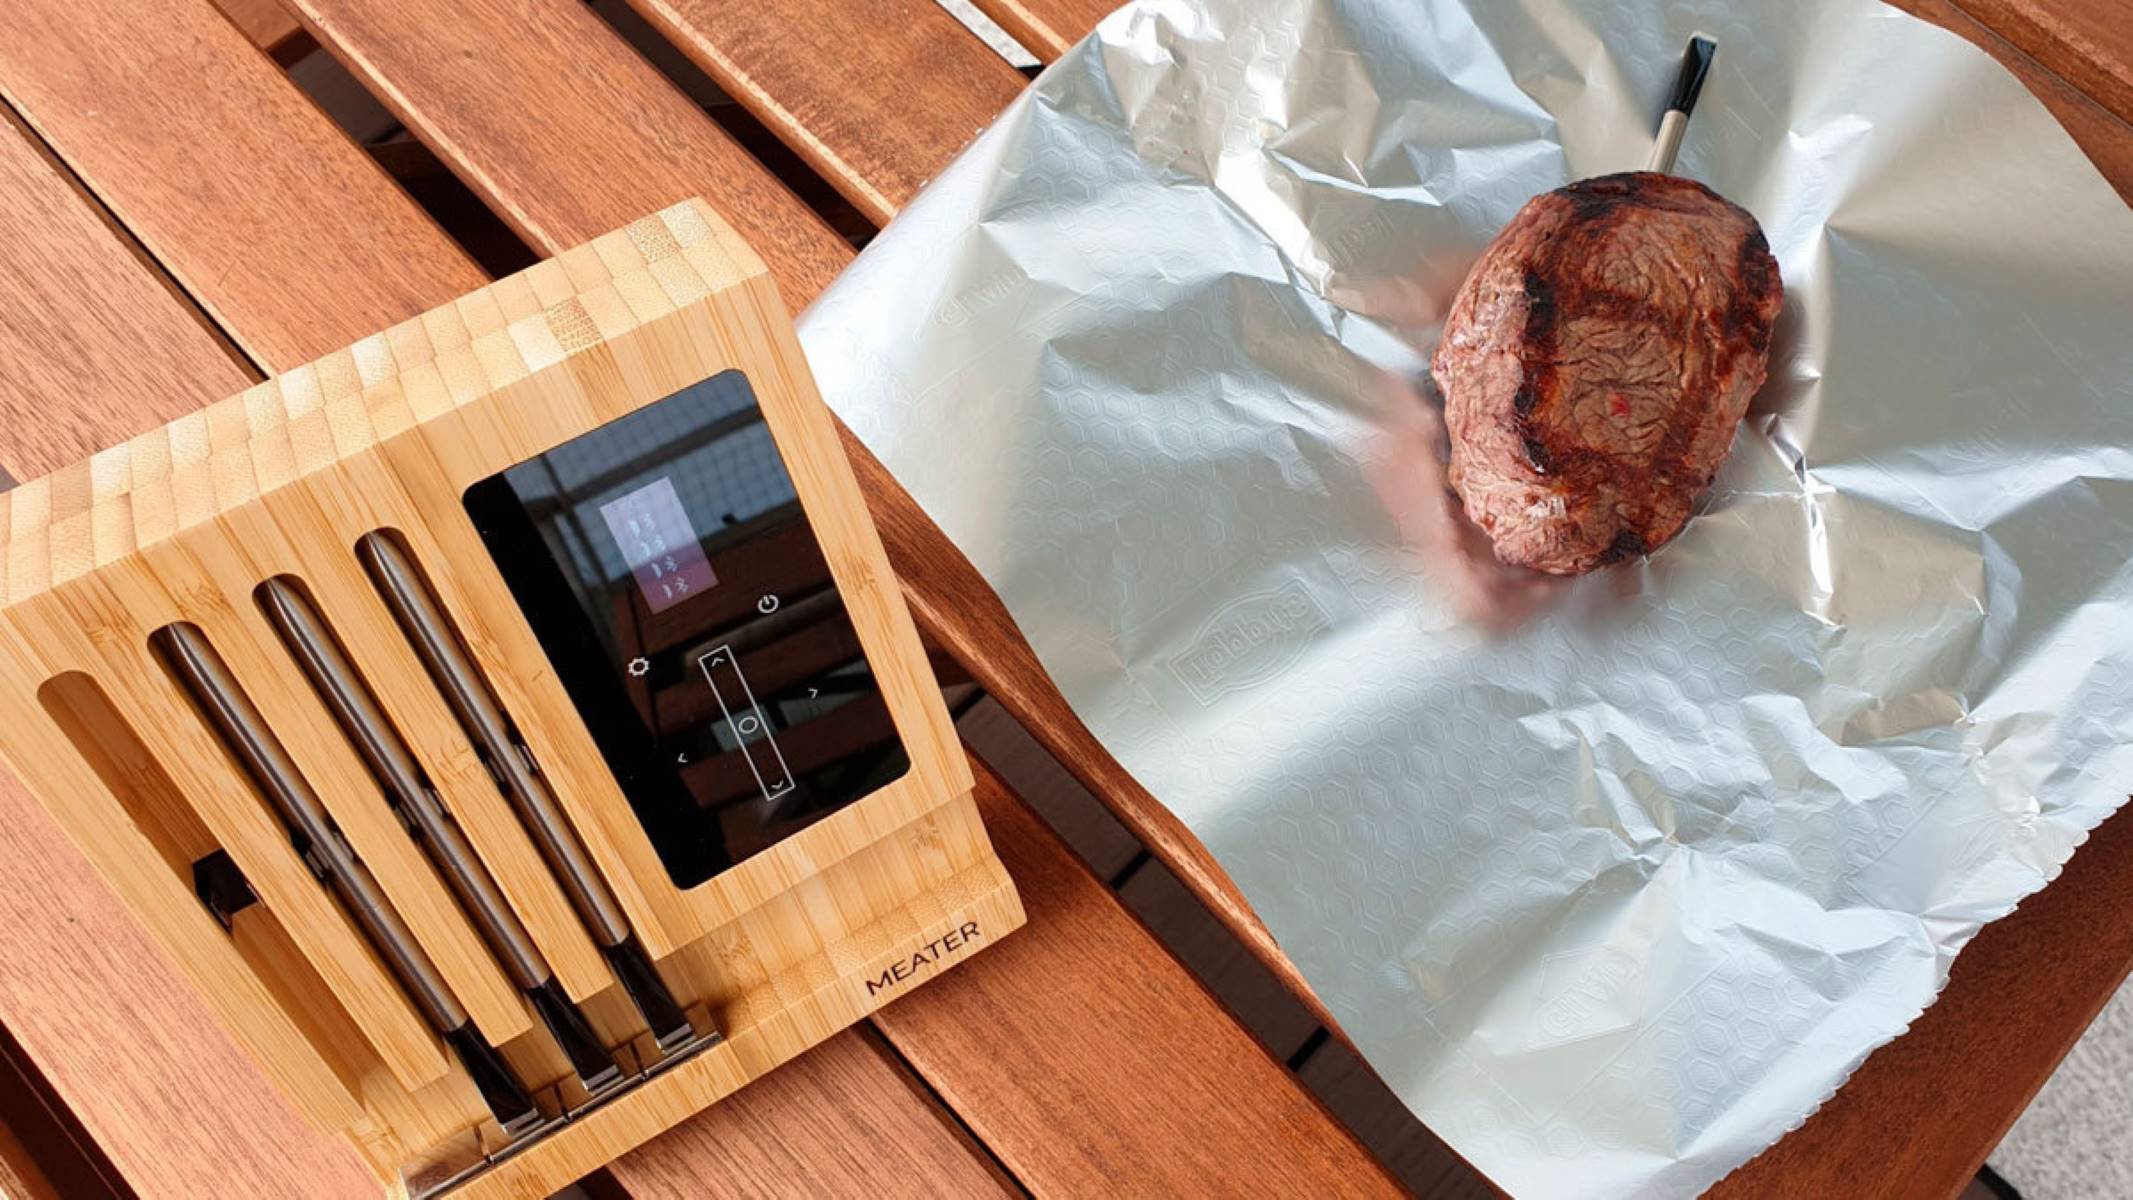 NEXTAMZ Digital Wireless 2 Dual Probe Meat Thermometer Kitchen